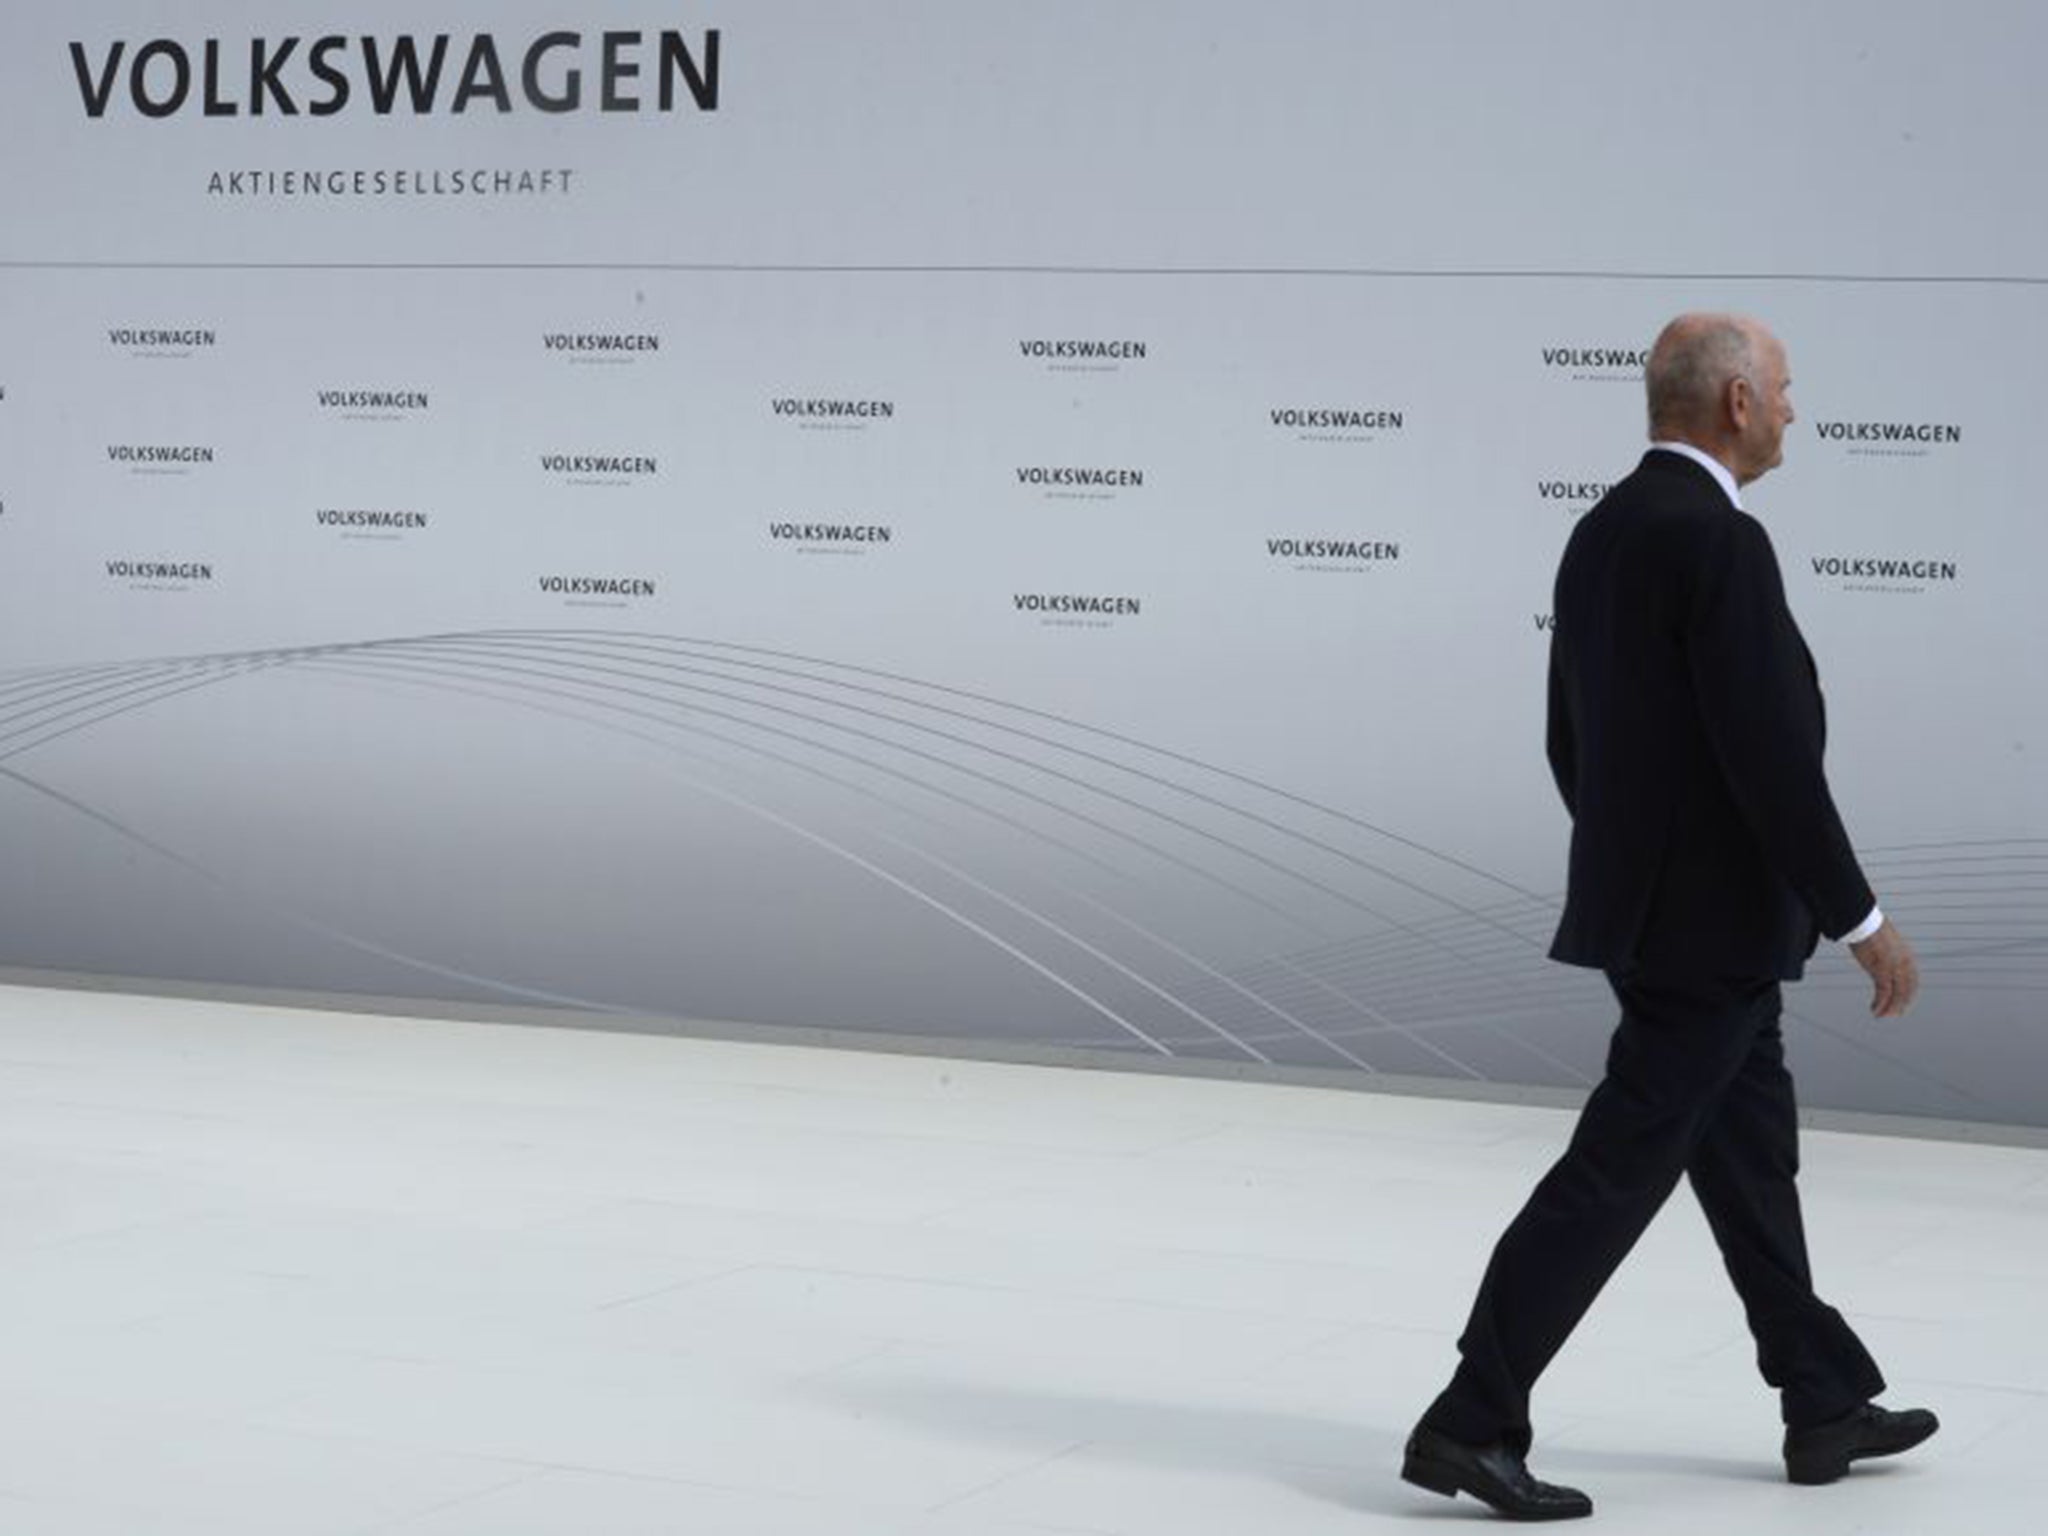 Ferdinand Piech, the chairman, at the Volkswagen plant in Wolfsburg, Germany